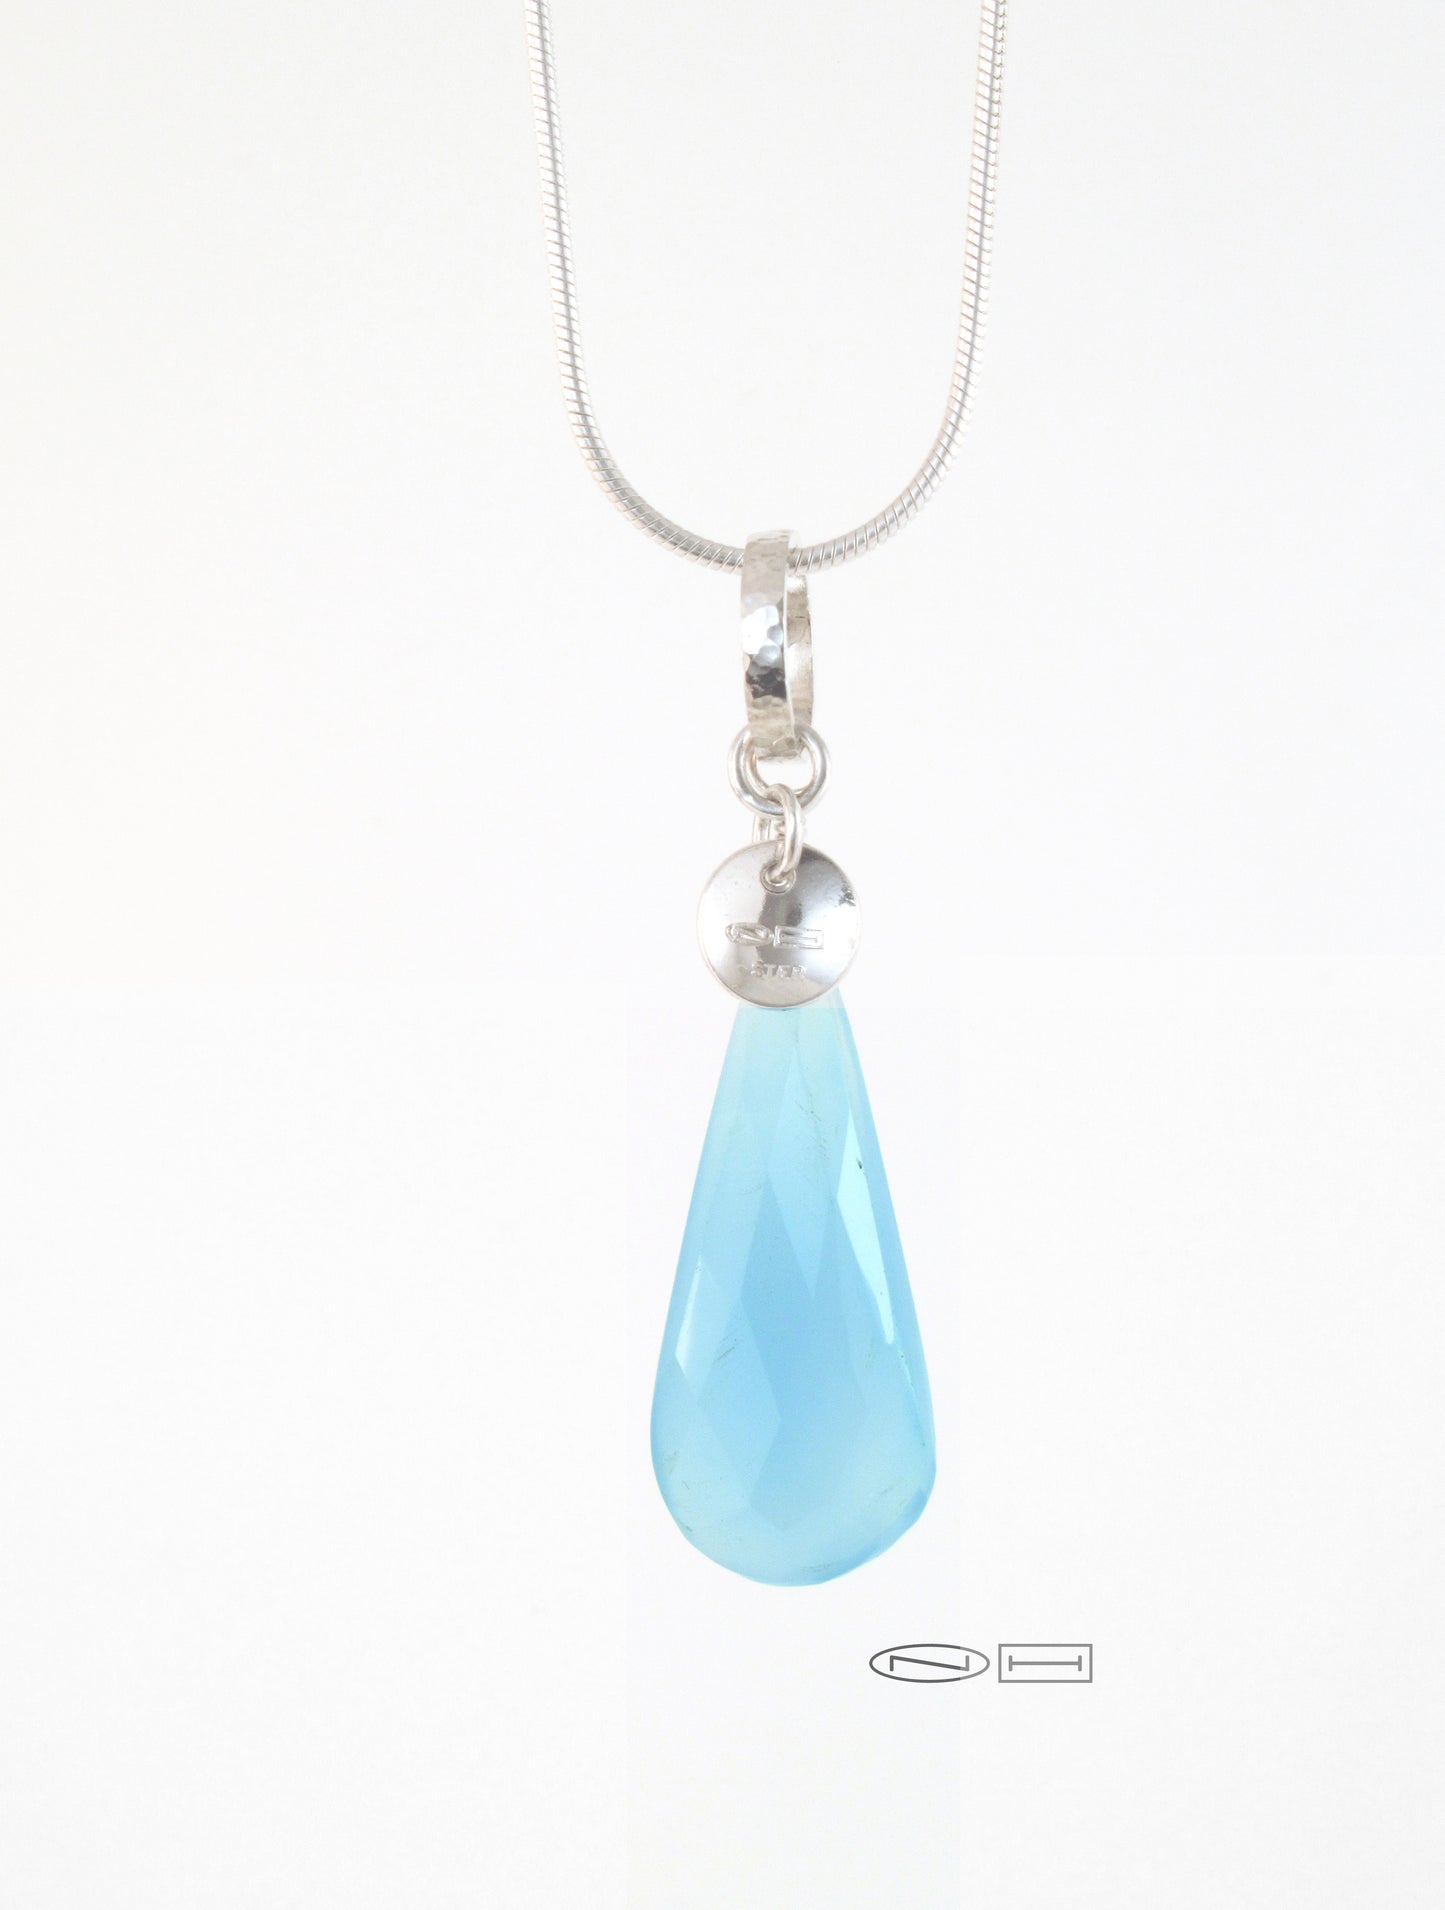 Gemstone necklaces by ZEALmetal, Nicole Horlor, in Kingston, ON, Canada